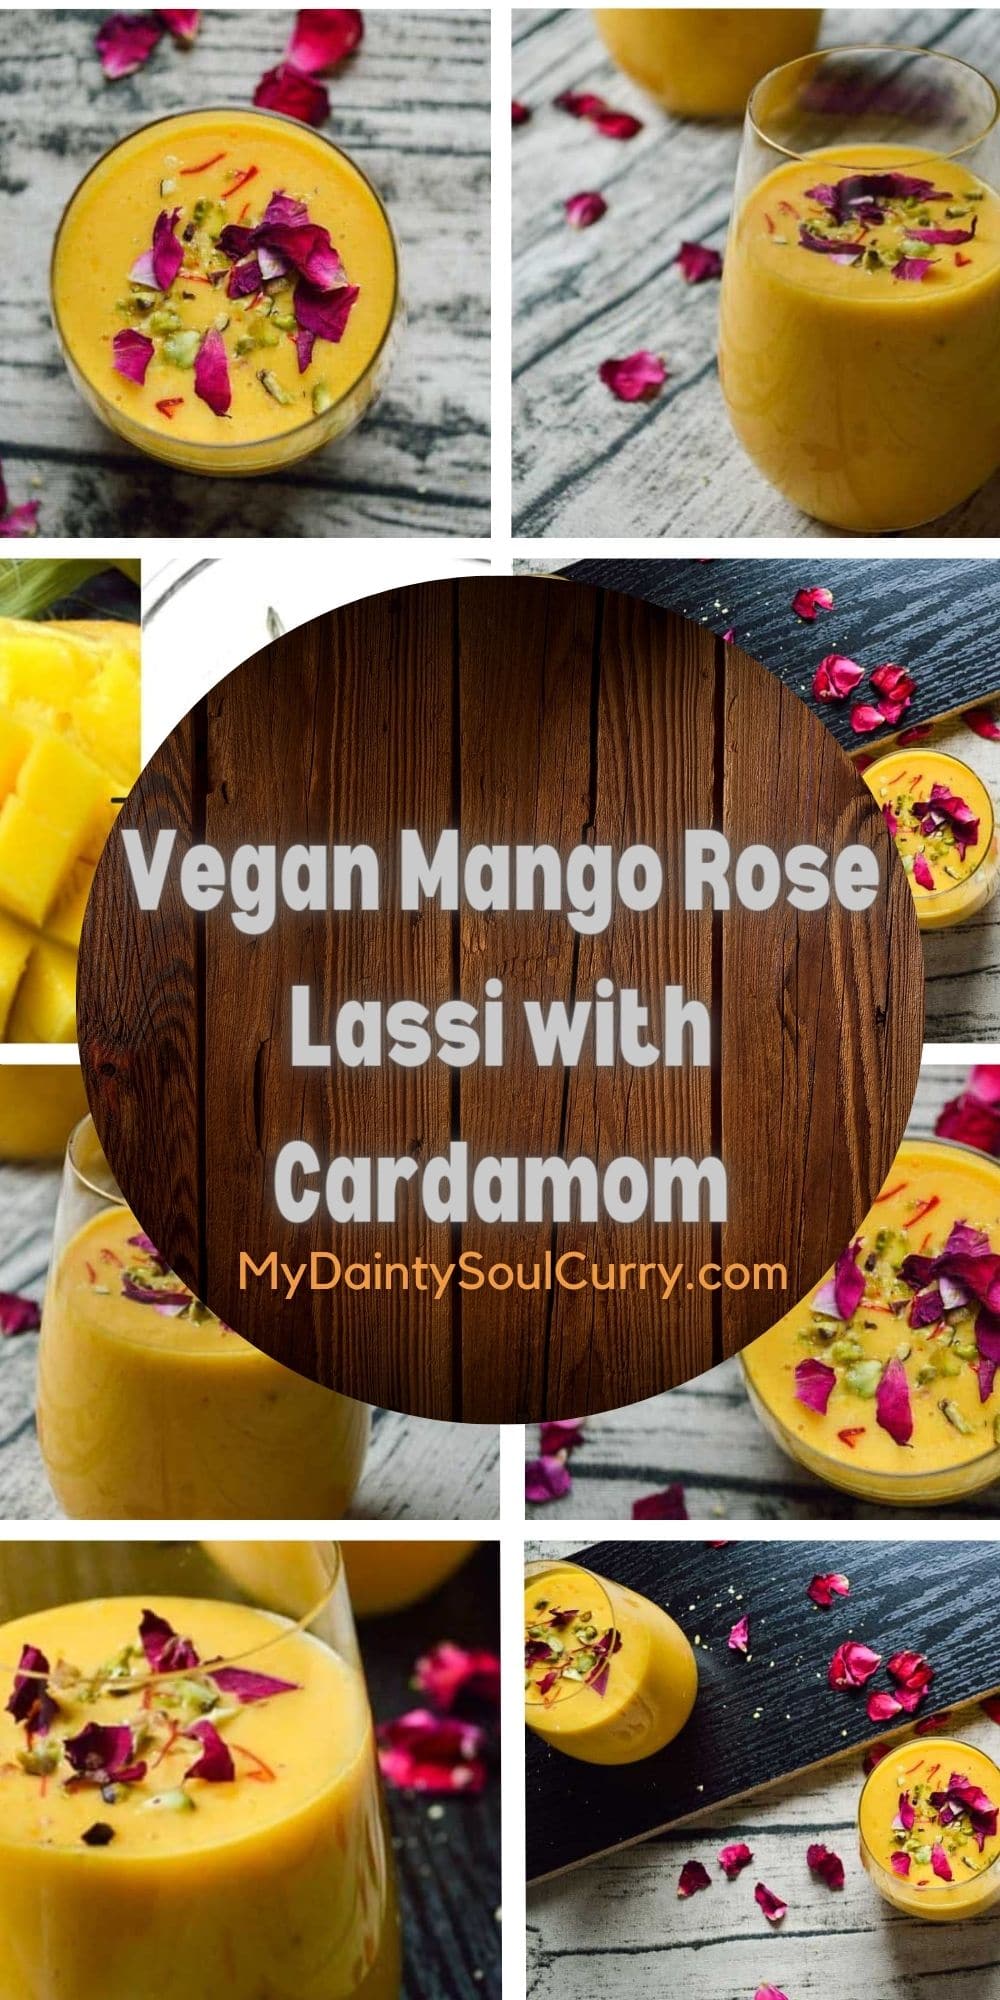 Vegan Mango Rose Lassi Healthy Recipe with Cardamom